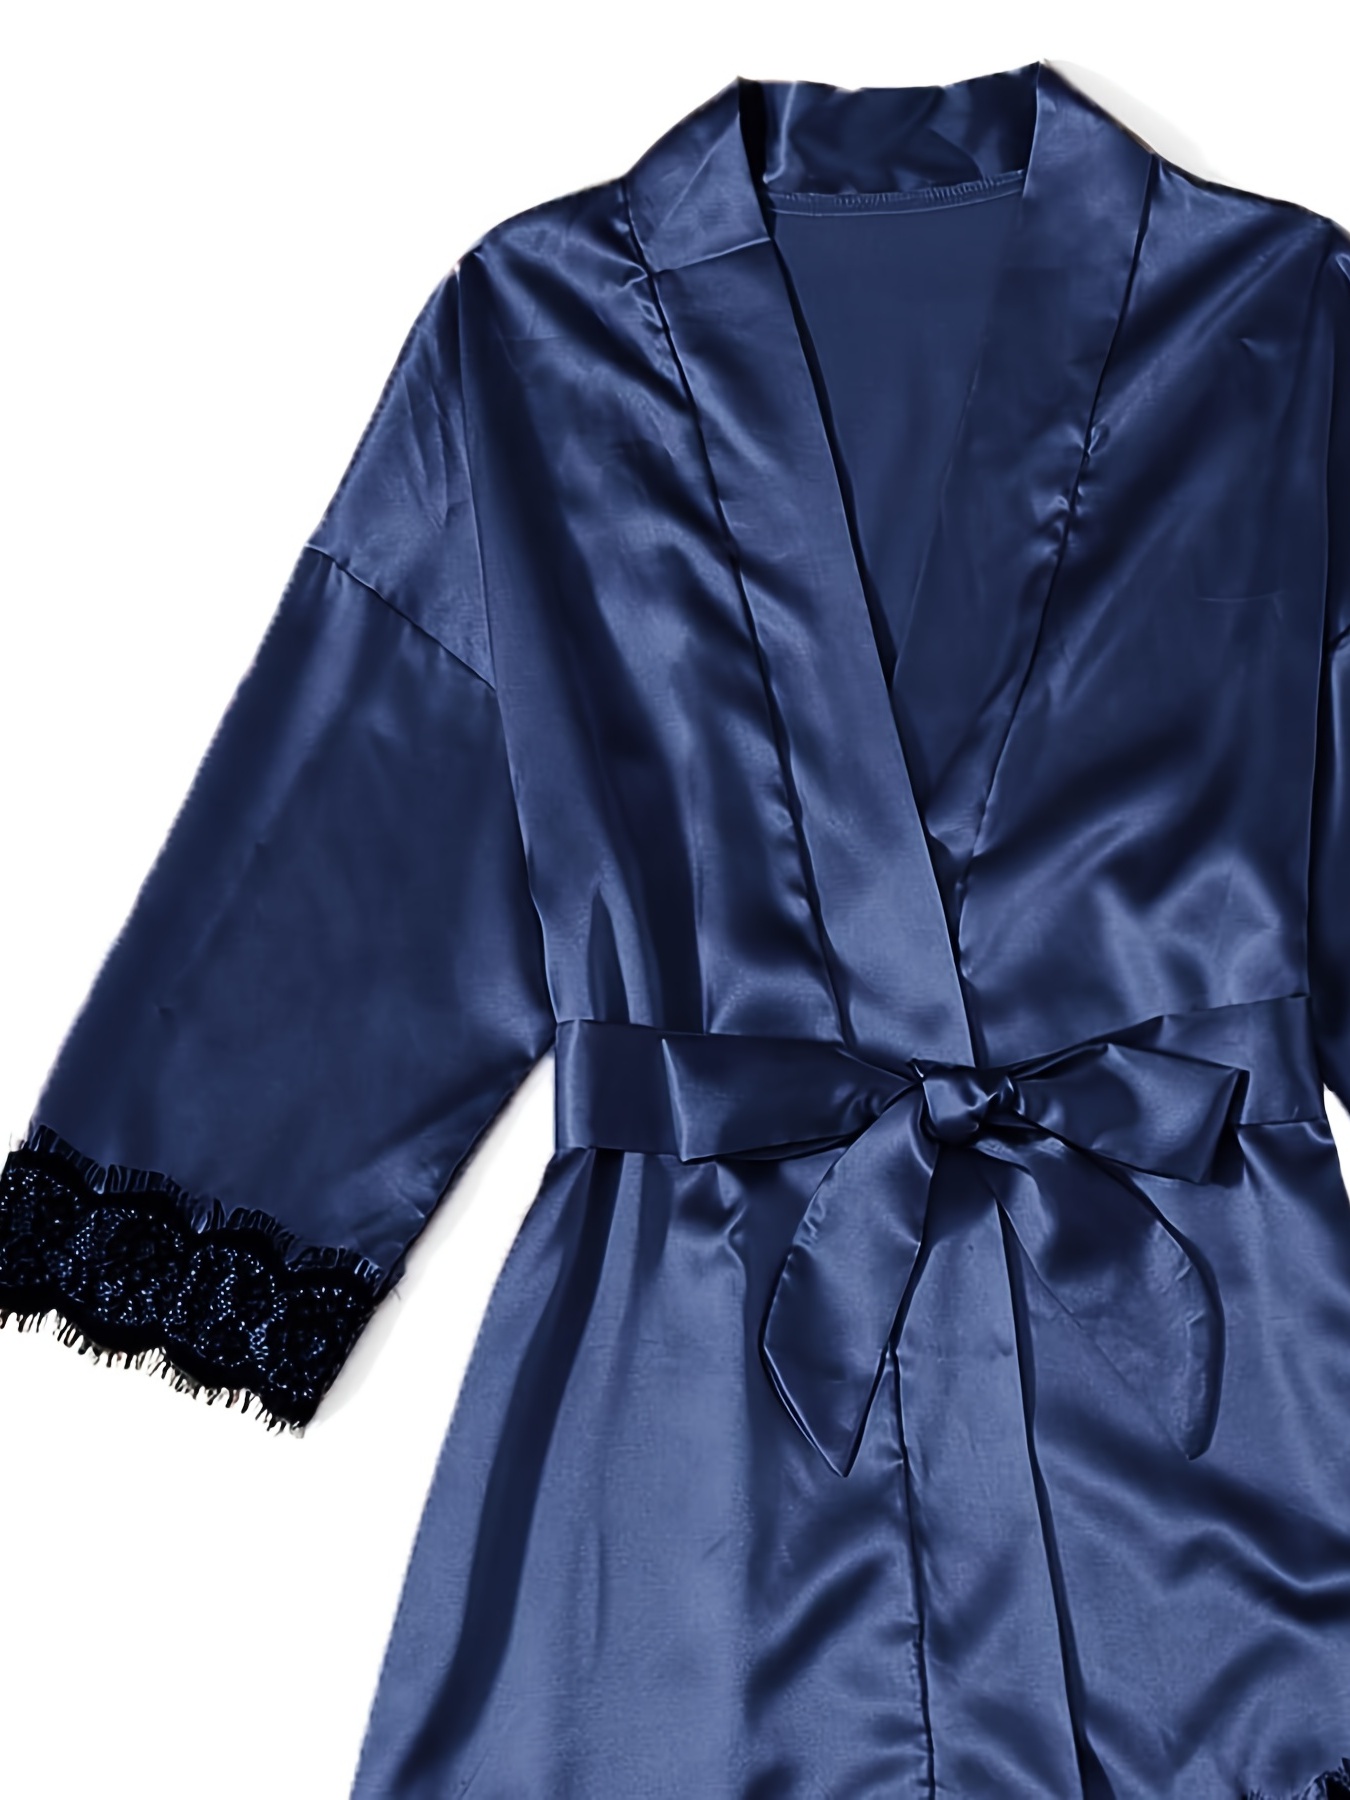 Lace Trim Solid Satin Pajamas Set Long Sleeve Short Robe + V - Temu